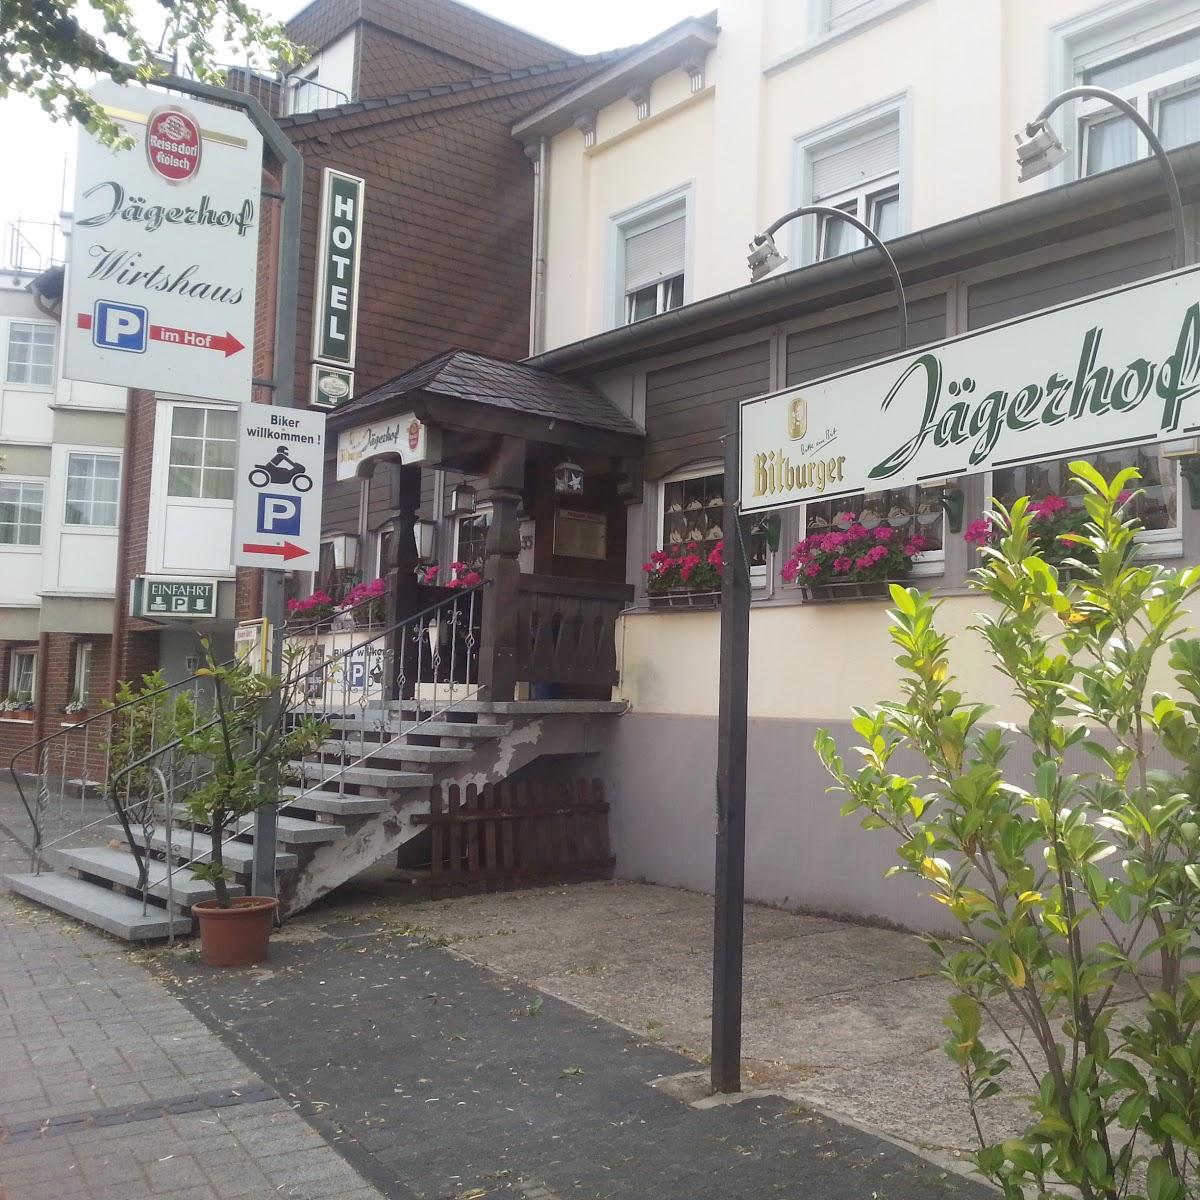 Restaurant "Jägerhof" in Lohmar